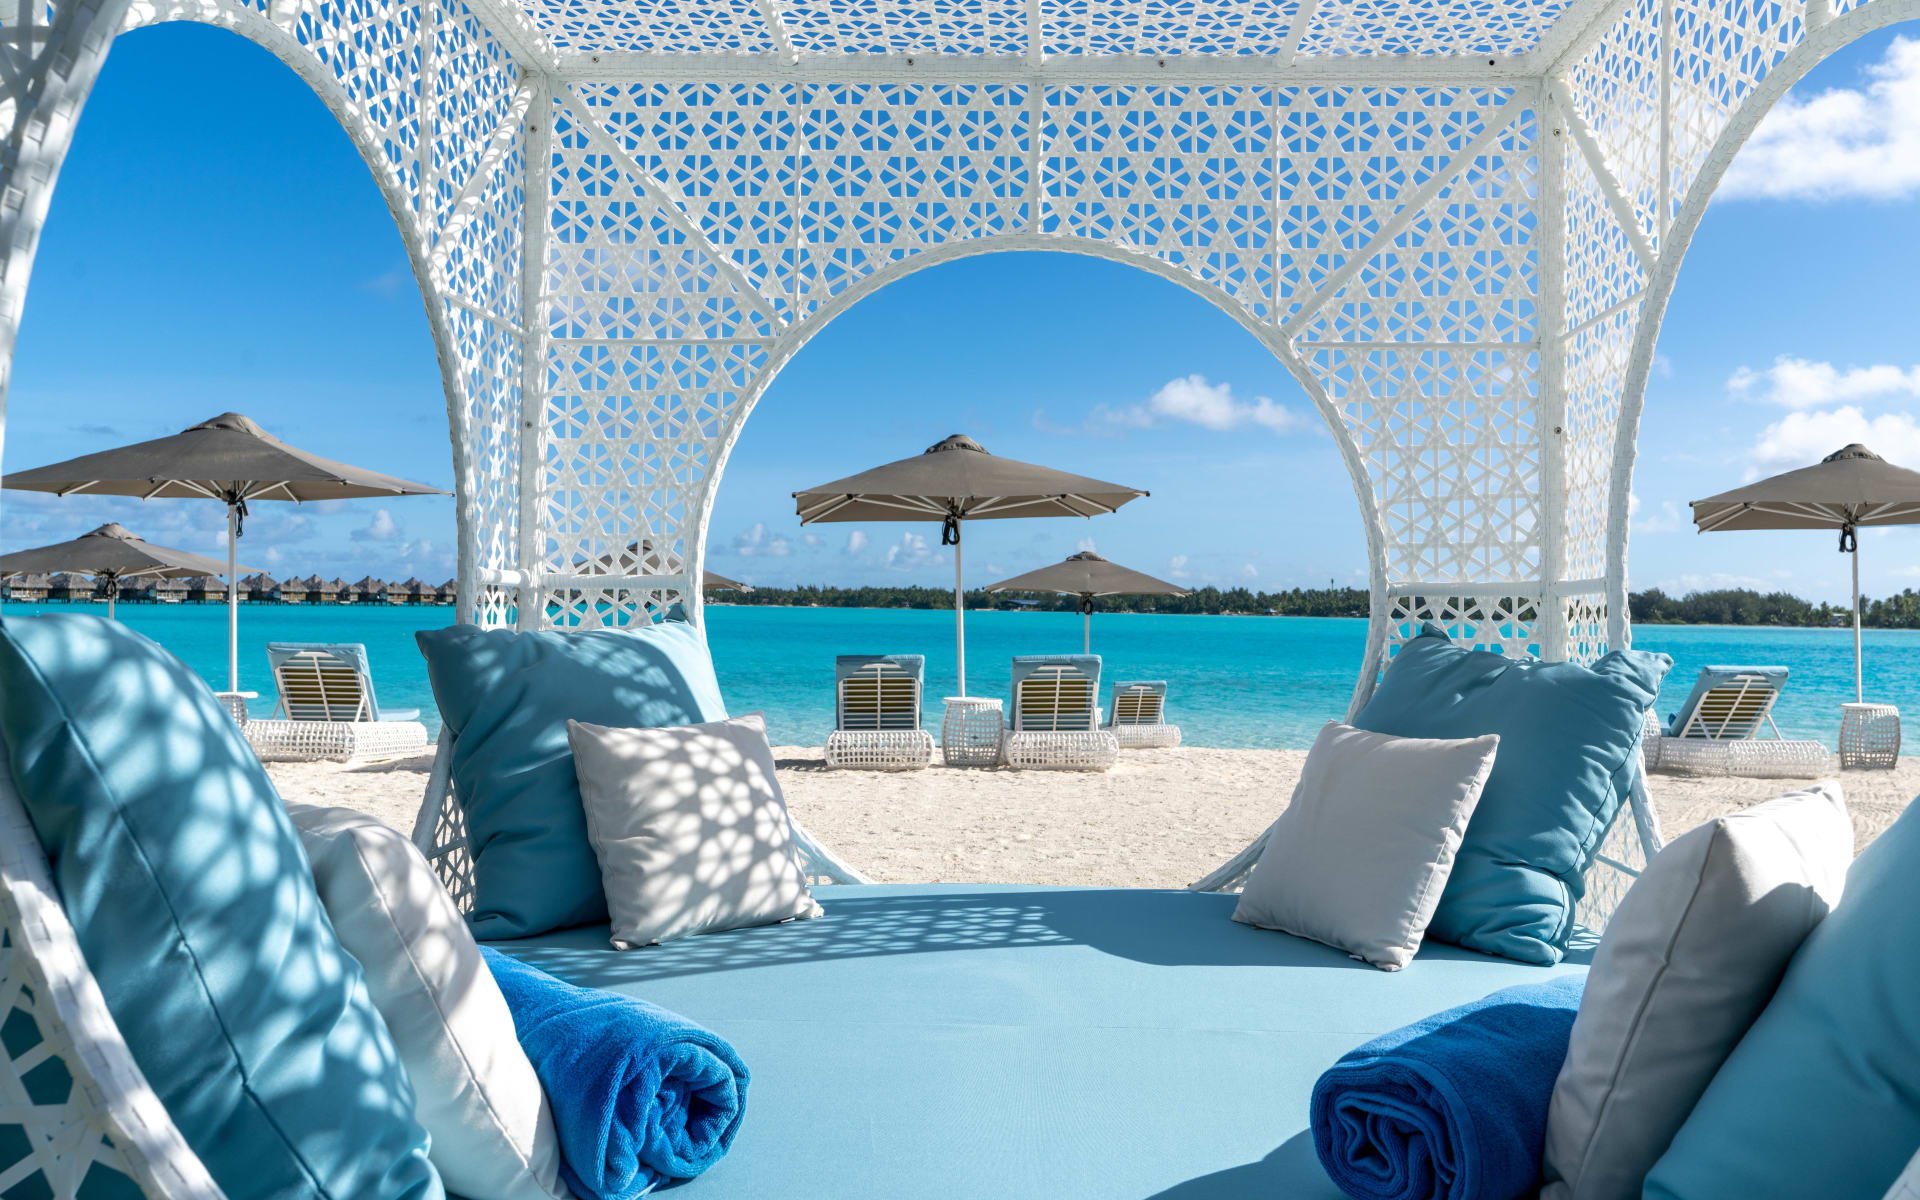 Lounge bed on sandy beach looking over blue ocean